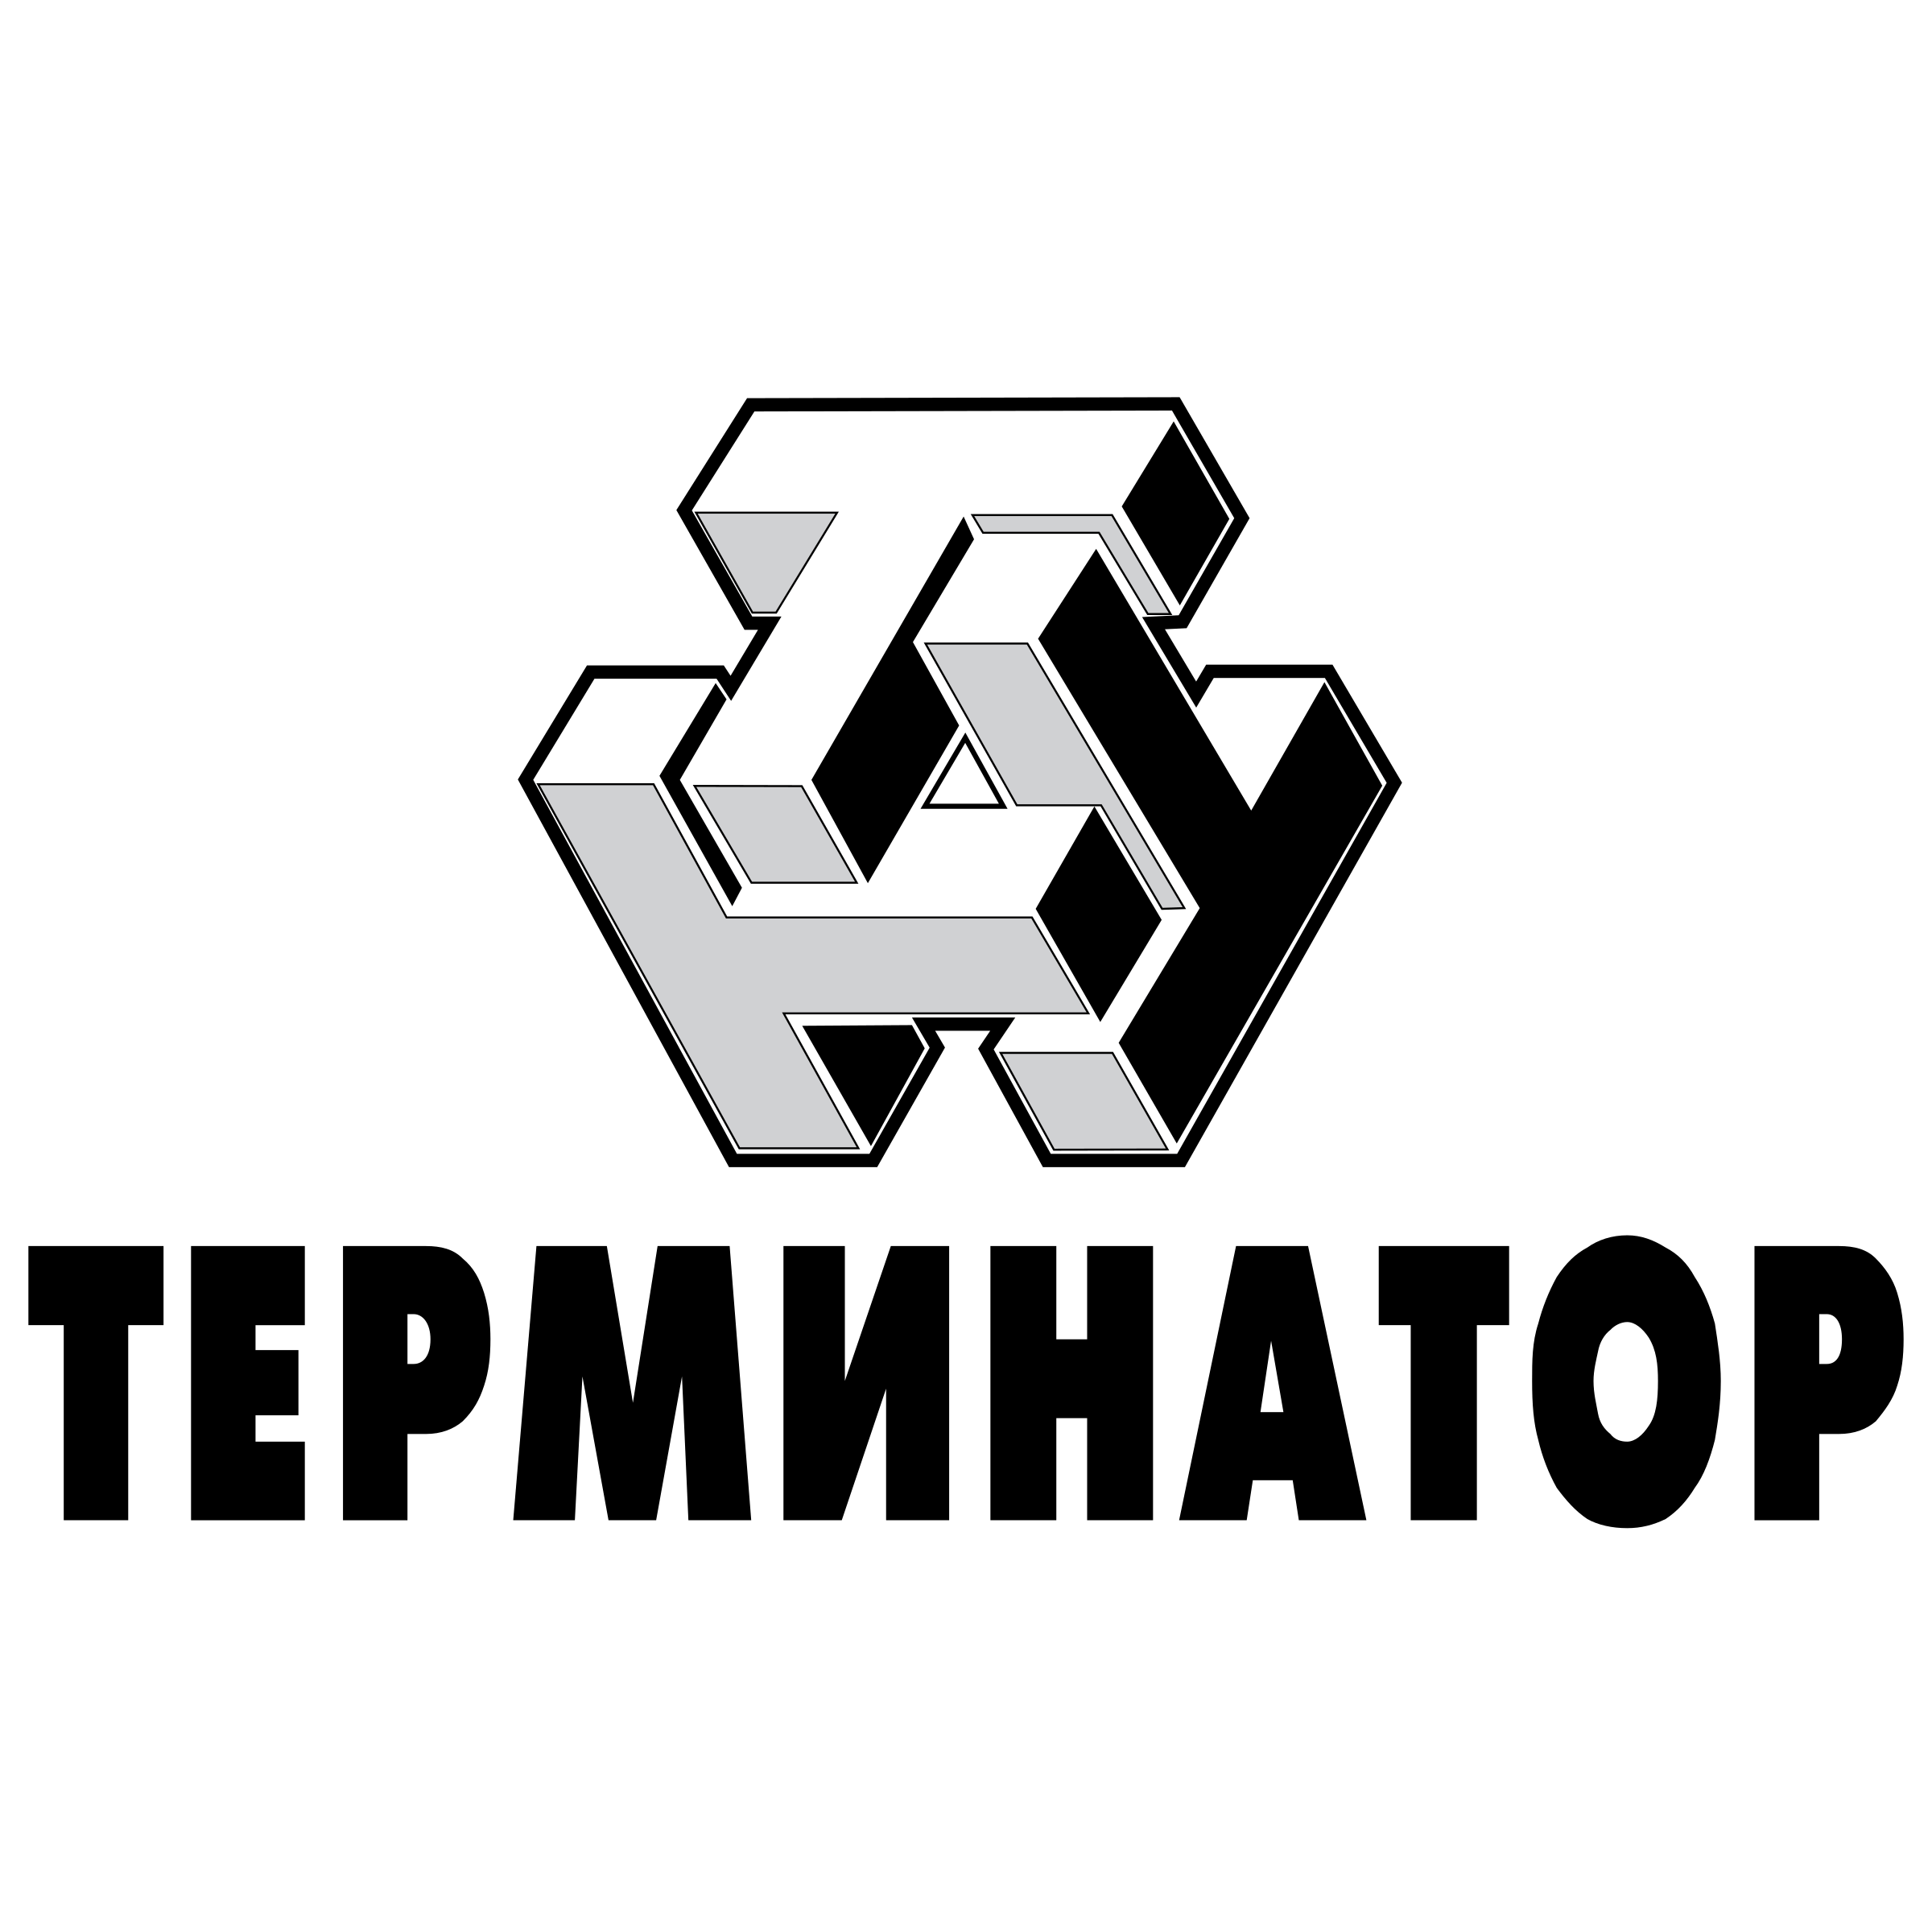 Terminator Logo - Terminator Logo PNG Transparent & SVG Vector - Freebie Supply